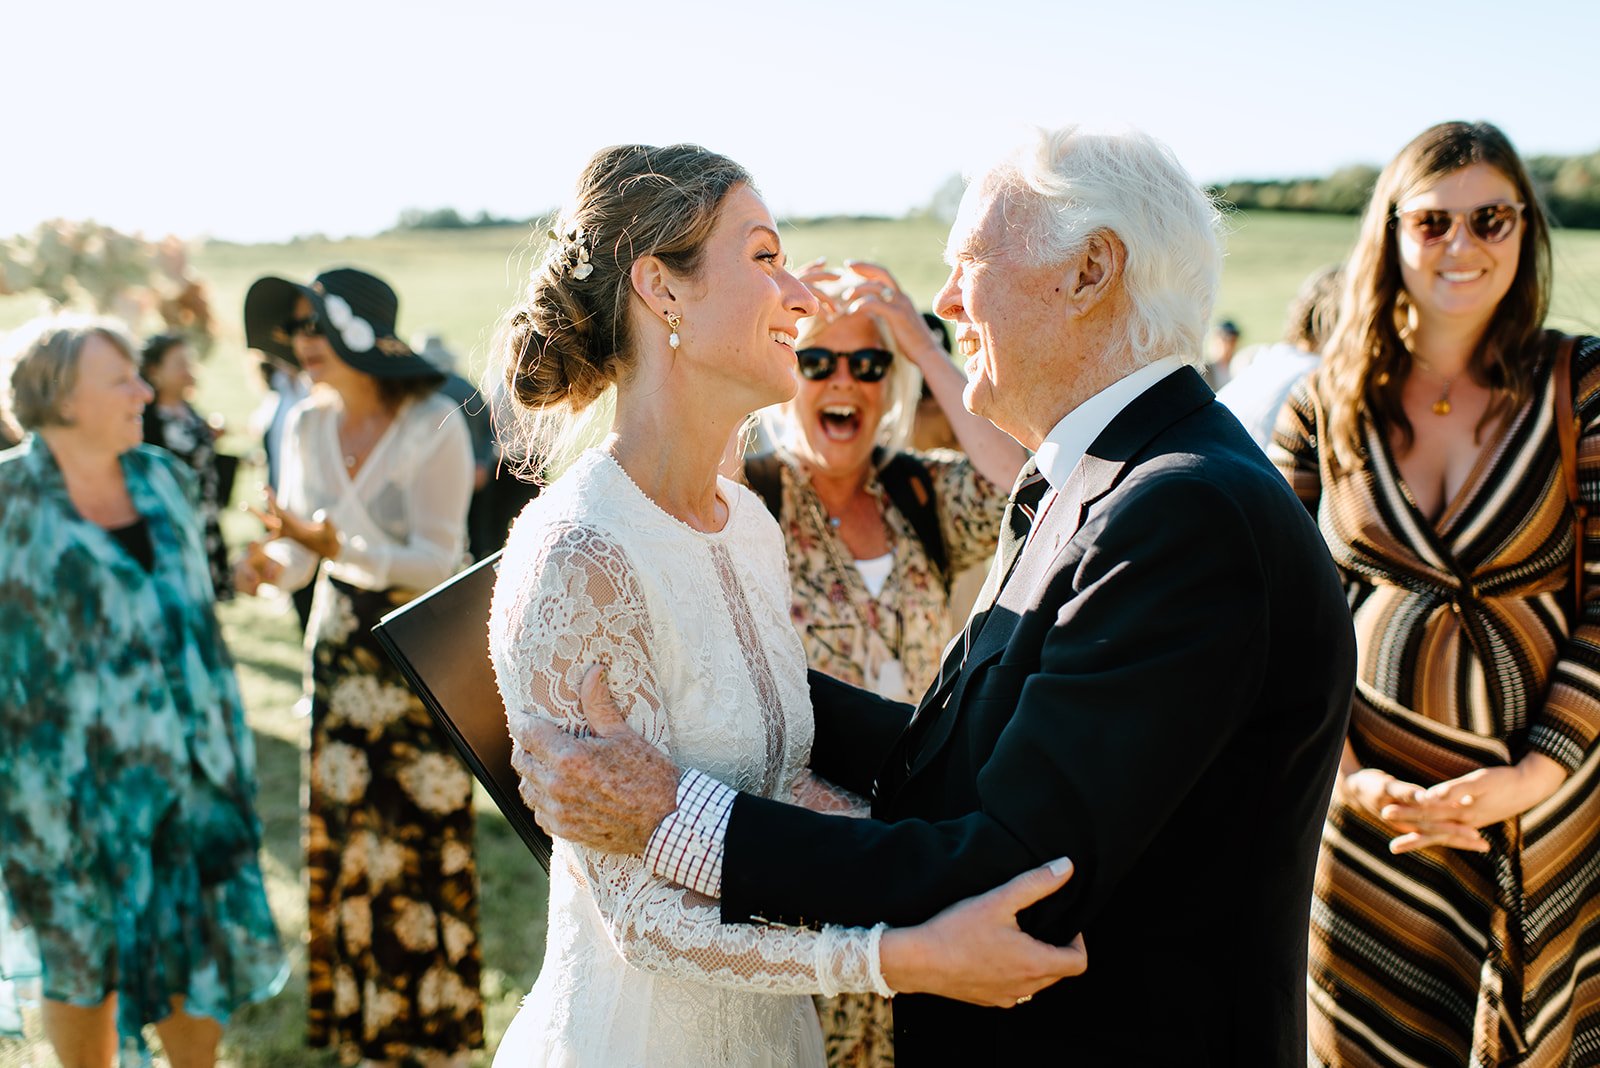 Family Farm Picnic Ontario Wedding - Sara Monika (62).jpg